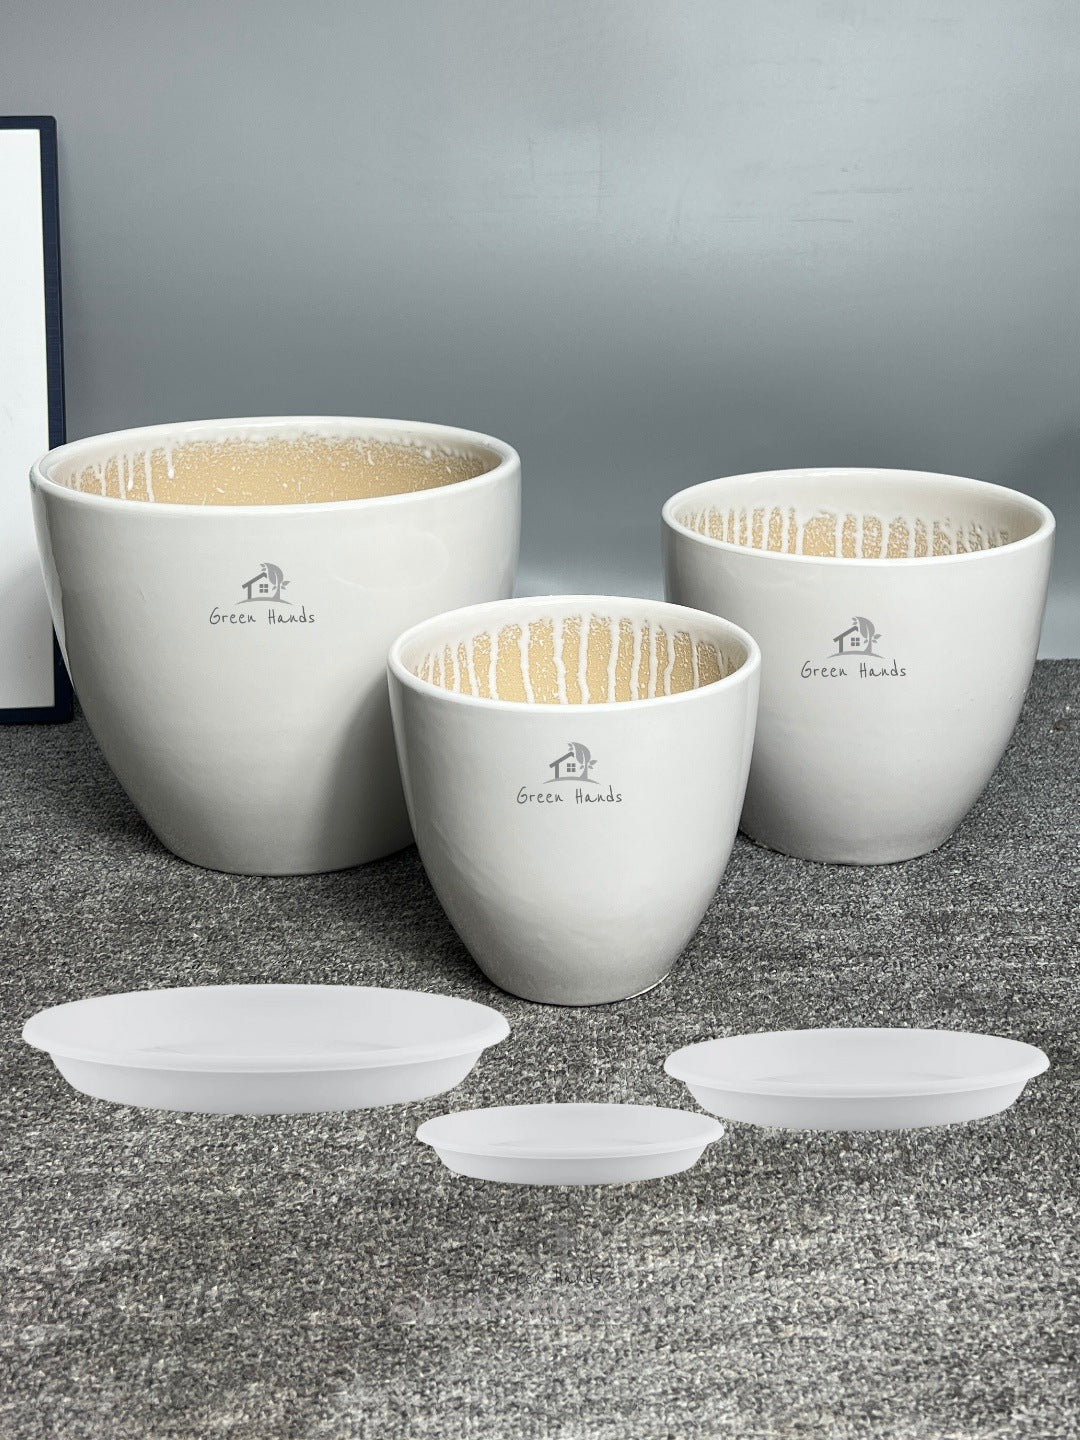 Modern White Ceramic Pots: Sleek Design in UAE